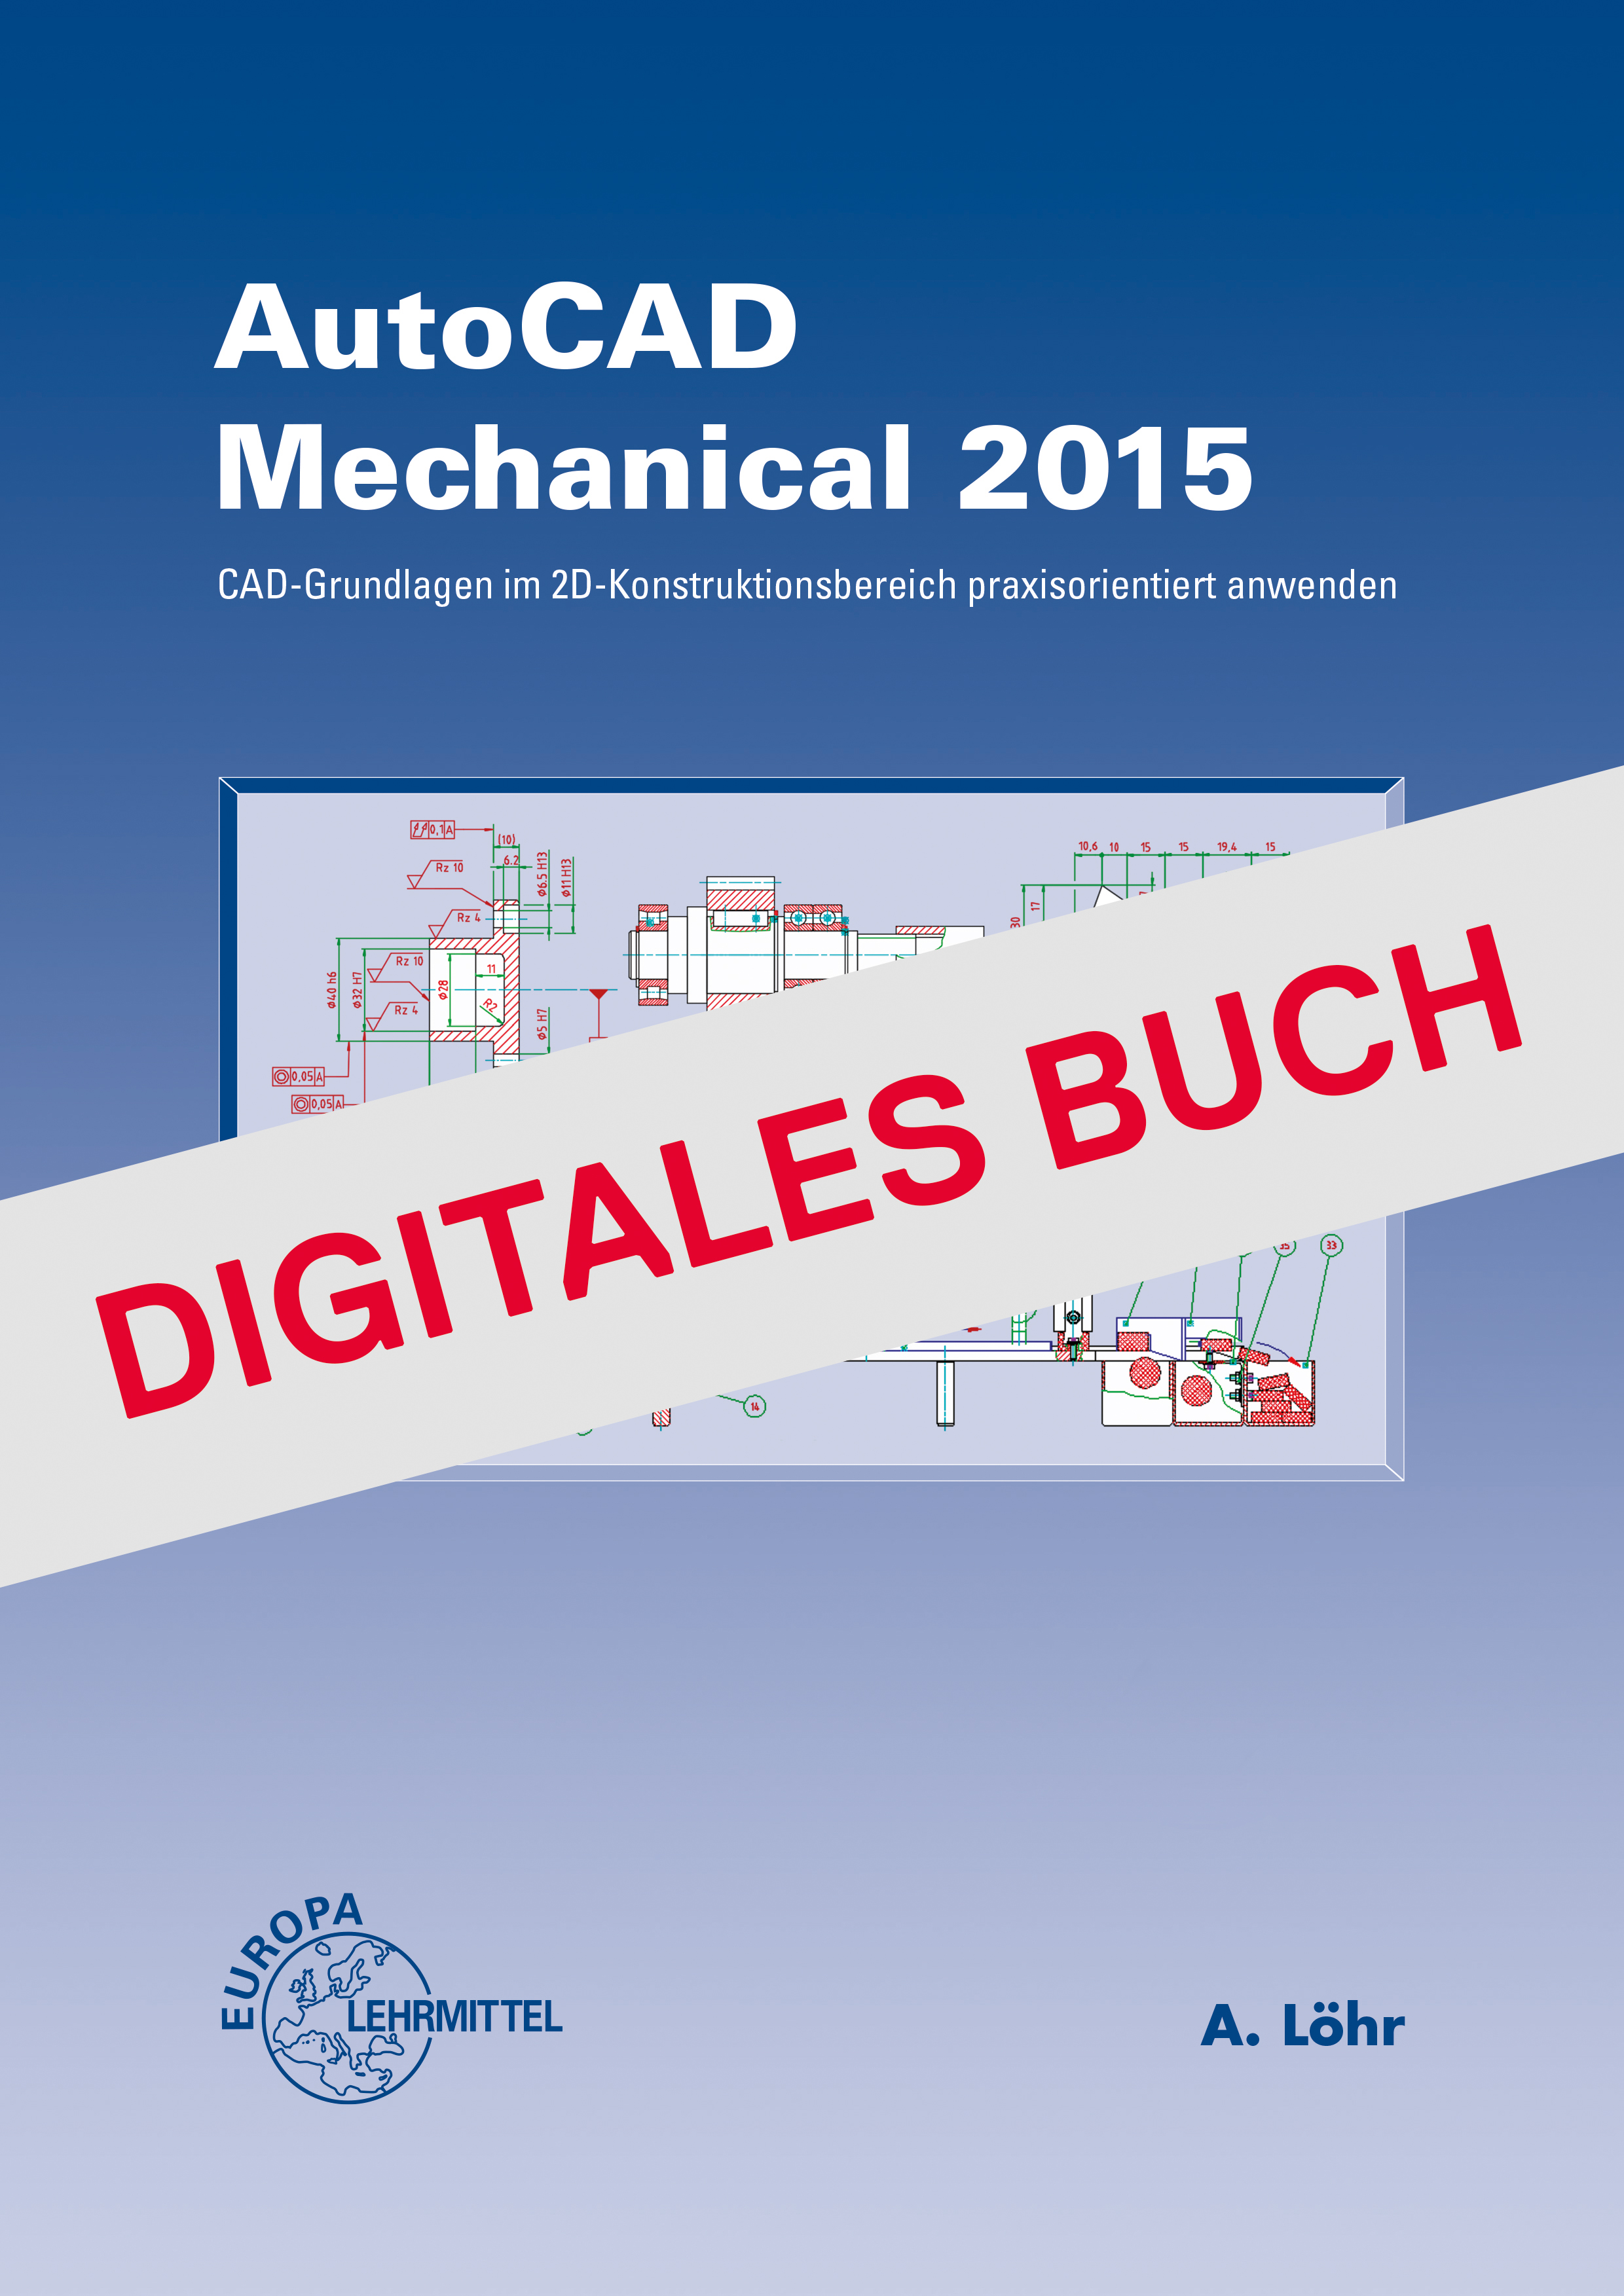 AutoCAD Mechanical 2015 - Digitales Buch